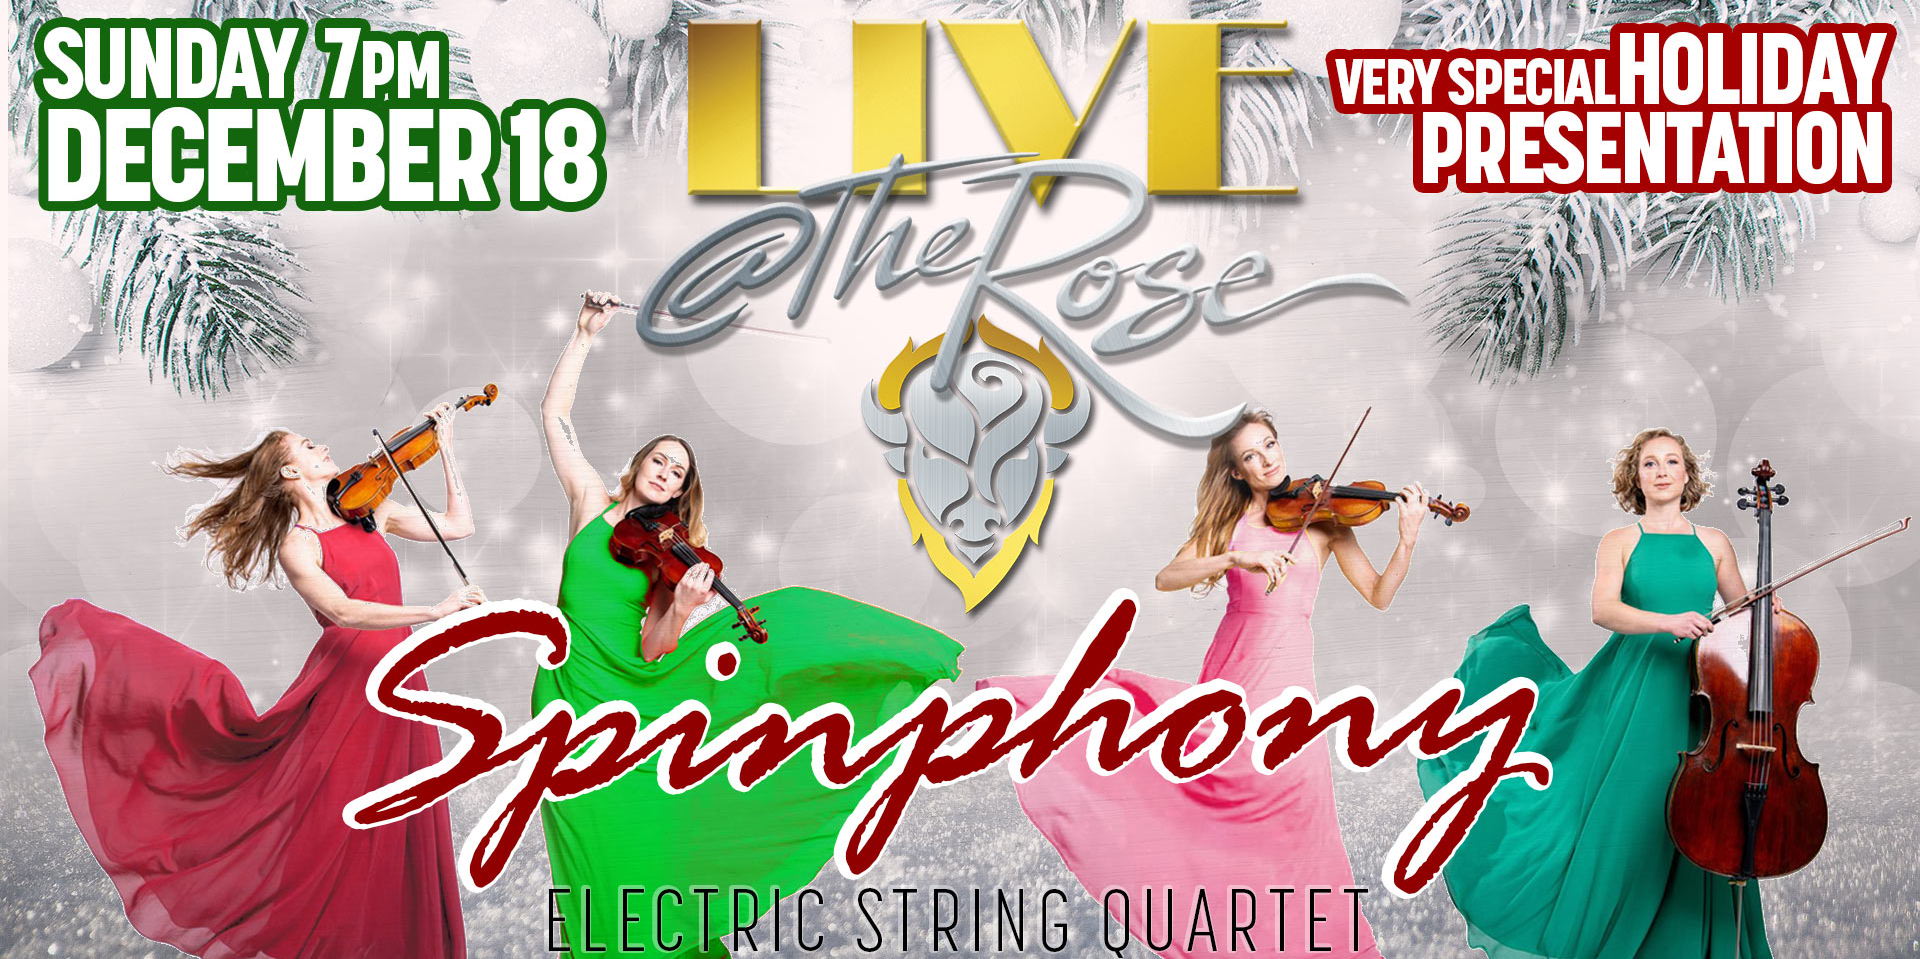 Live @ The Rose - Spinphony Electric String Quartet promotional image